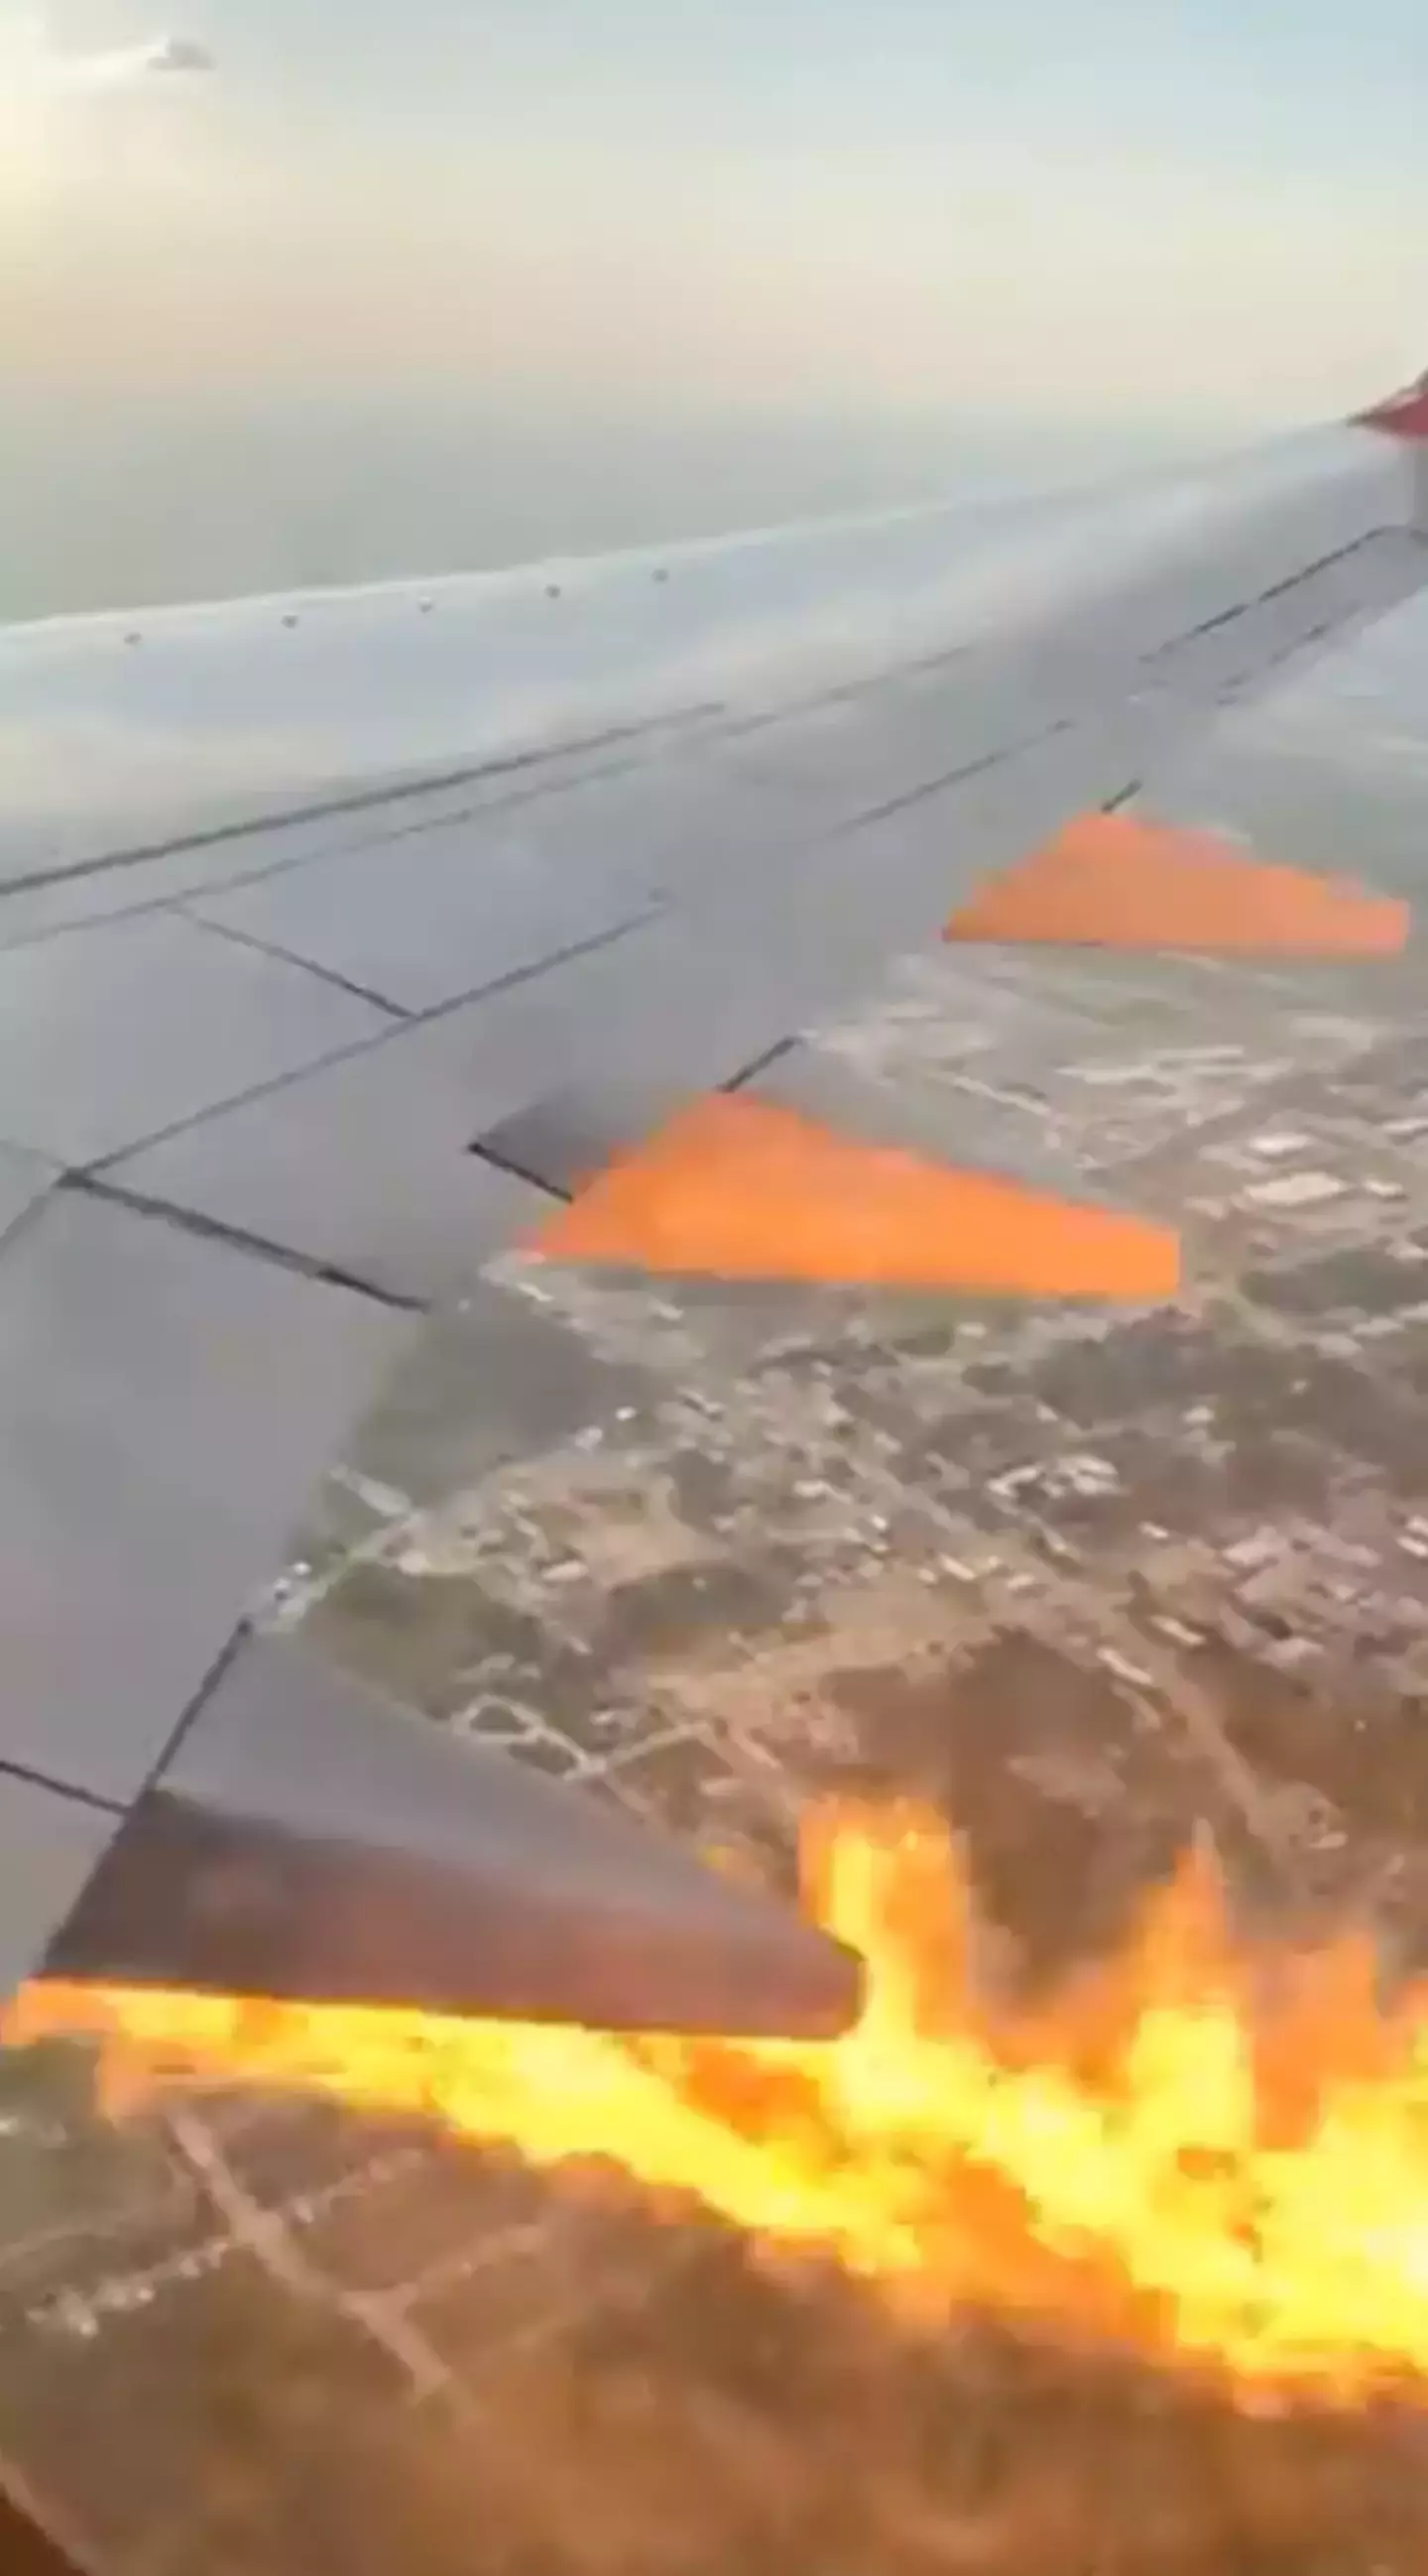 The plane had an emergency landing.